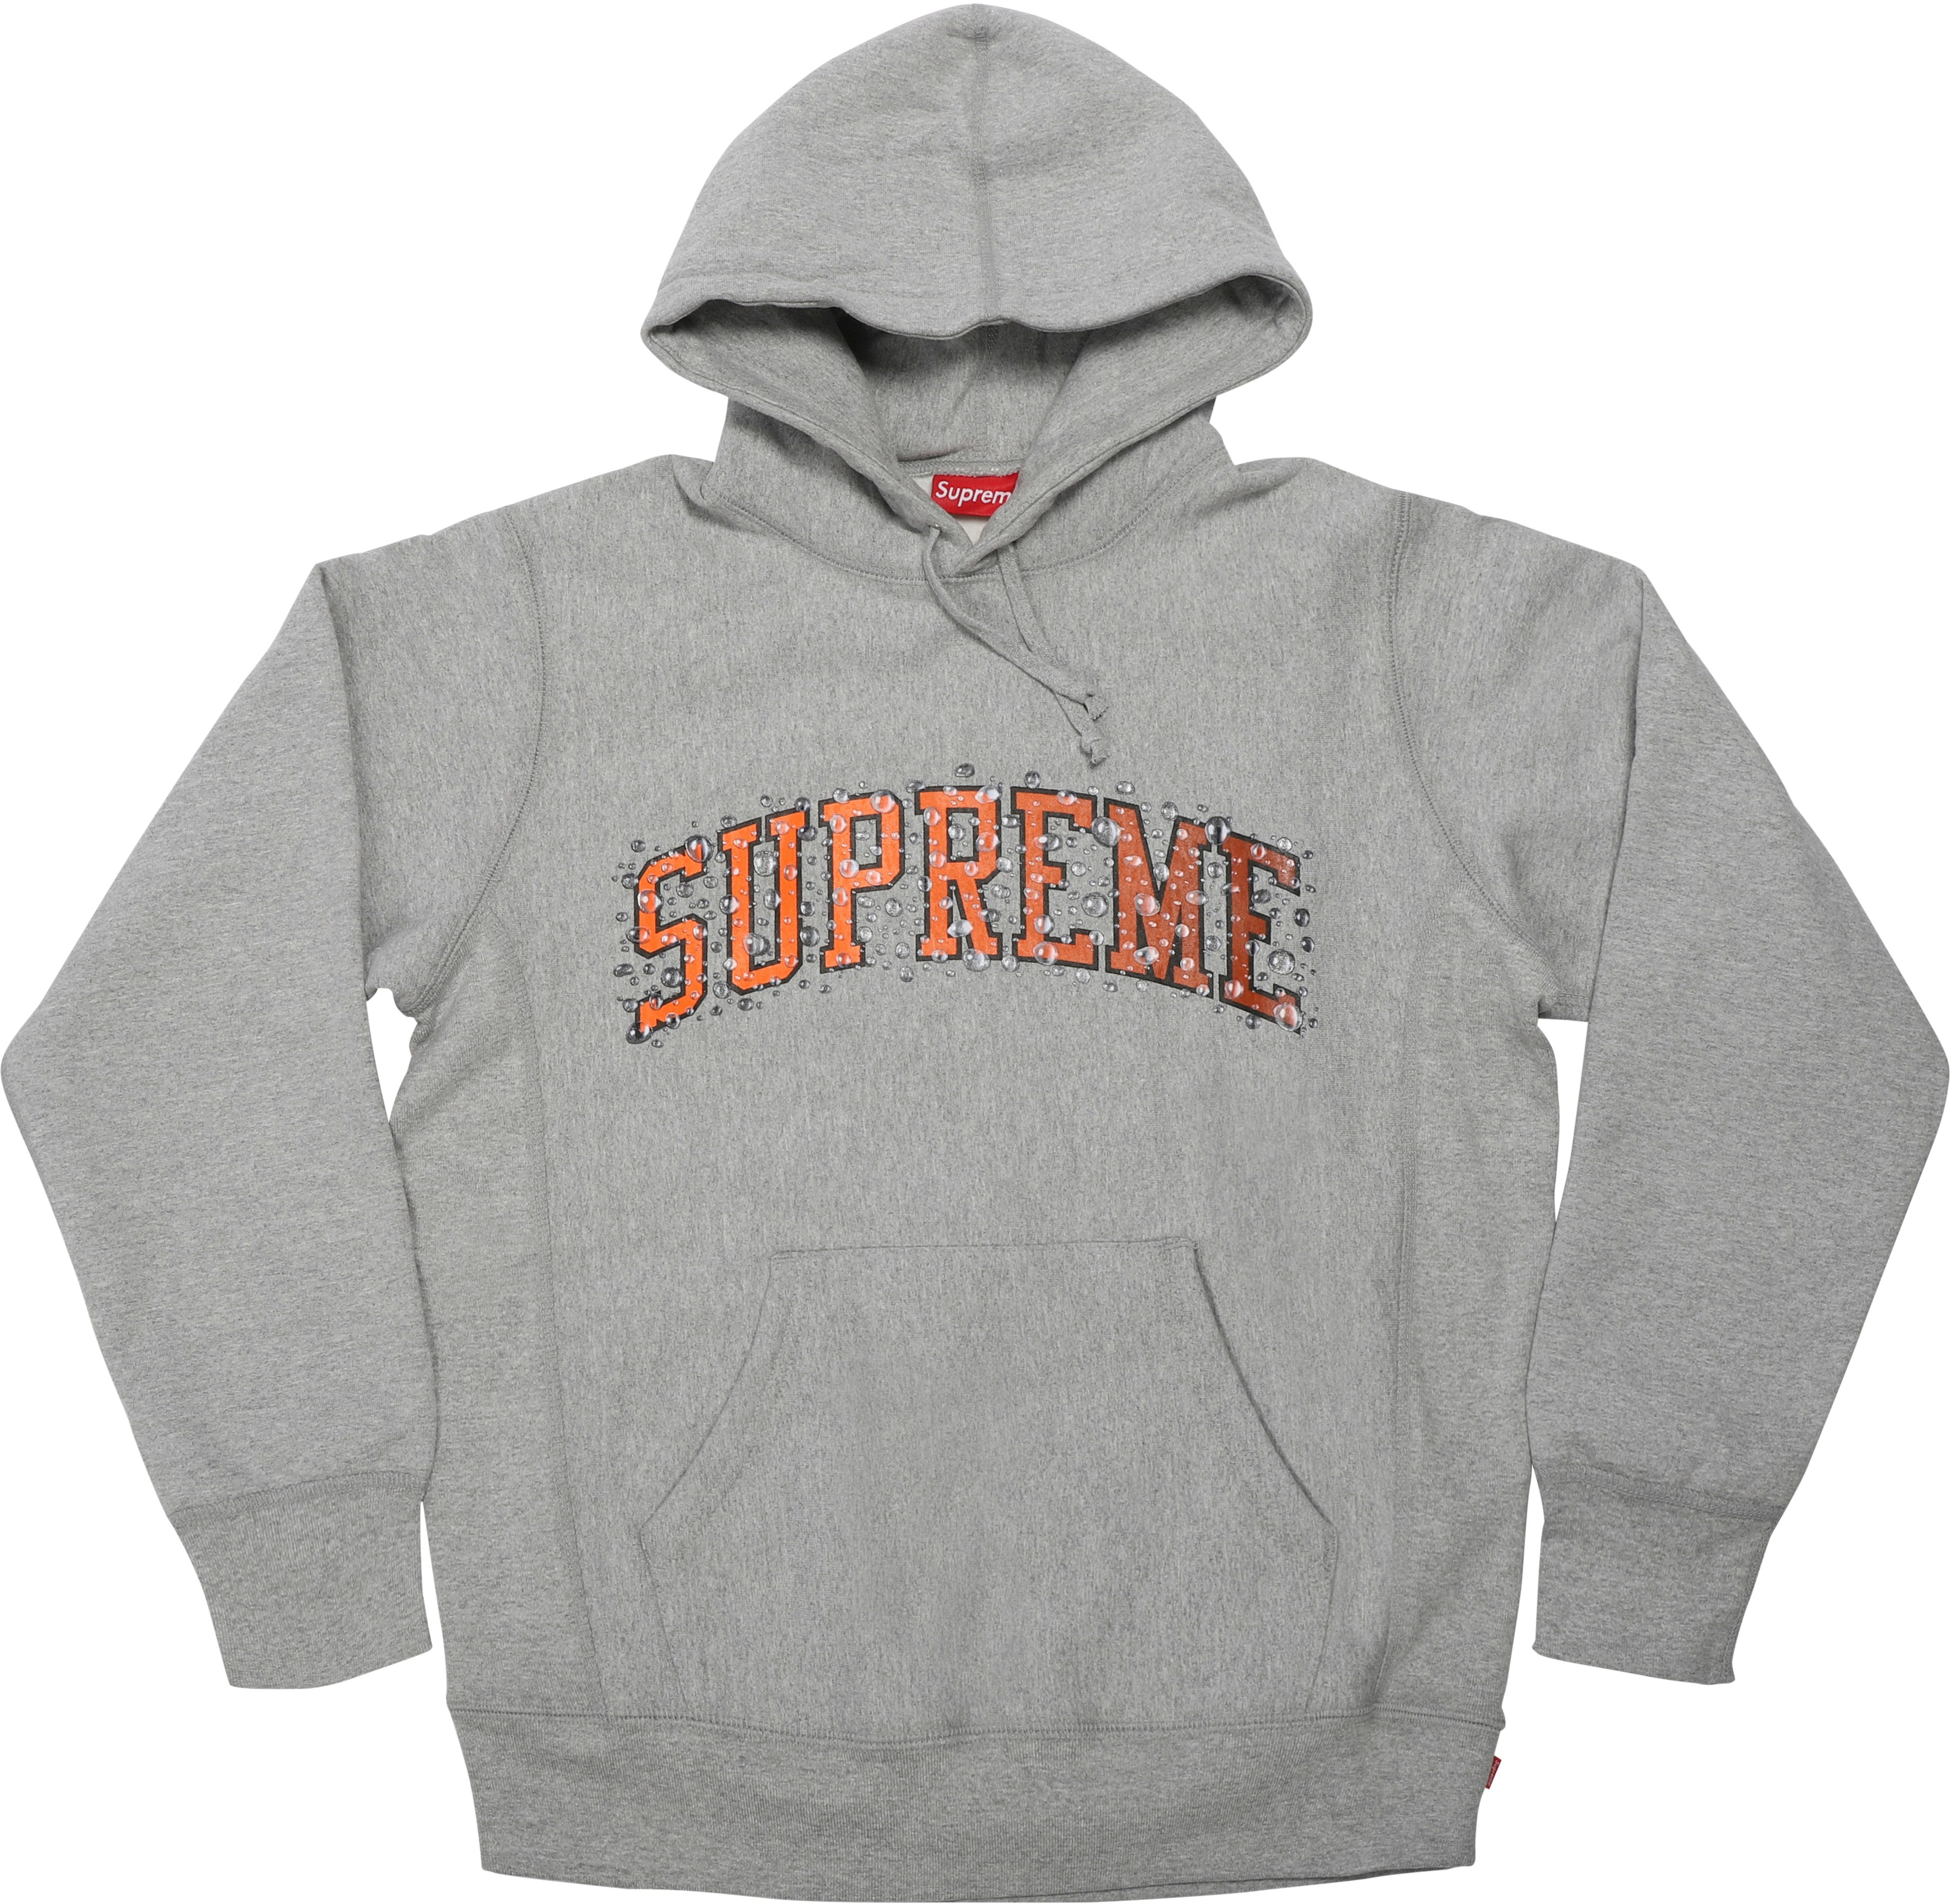 supreme/water arc hooded sweatshirt